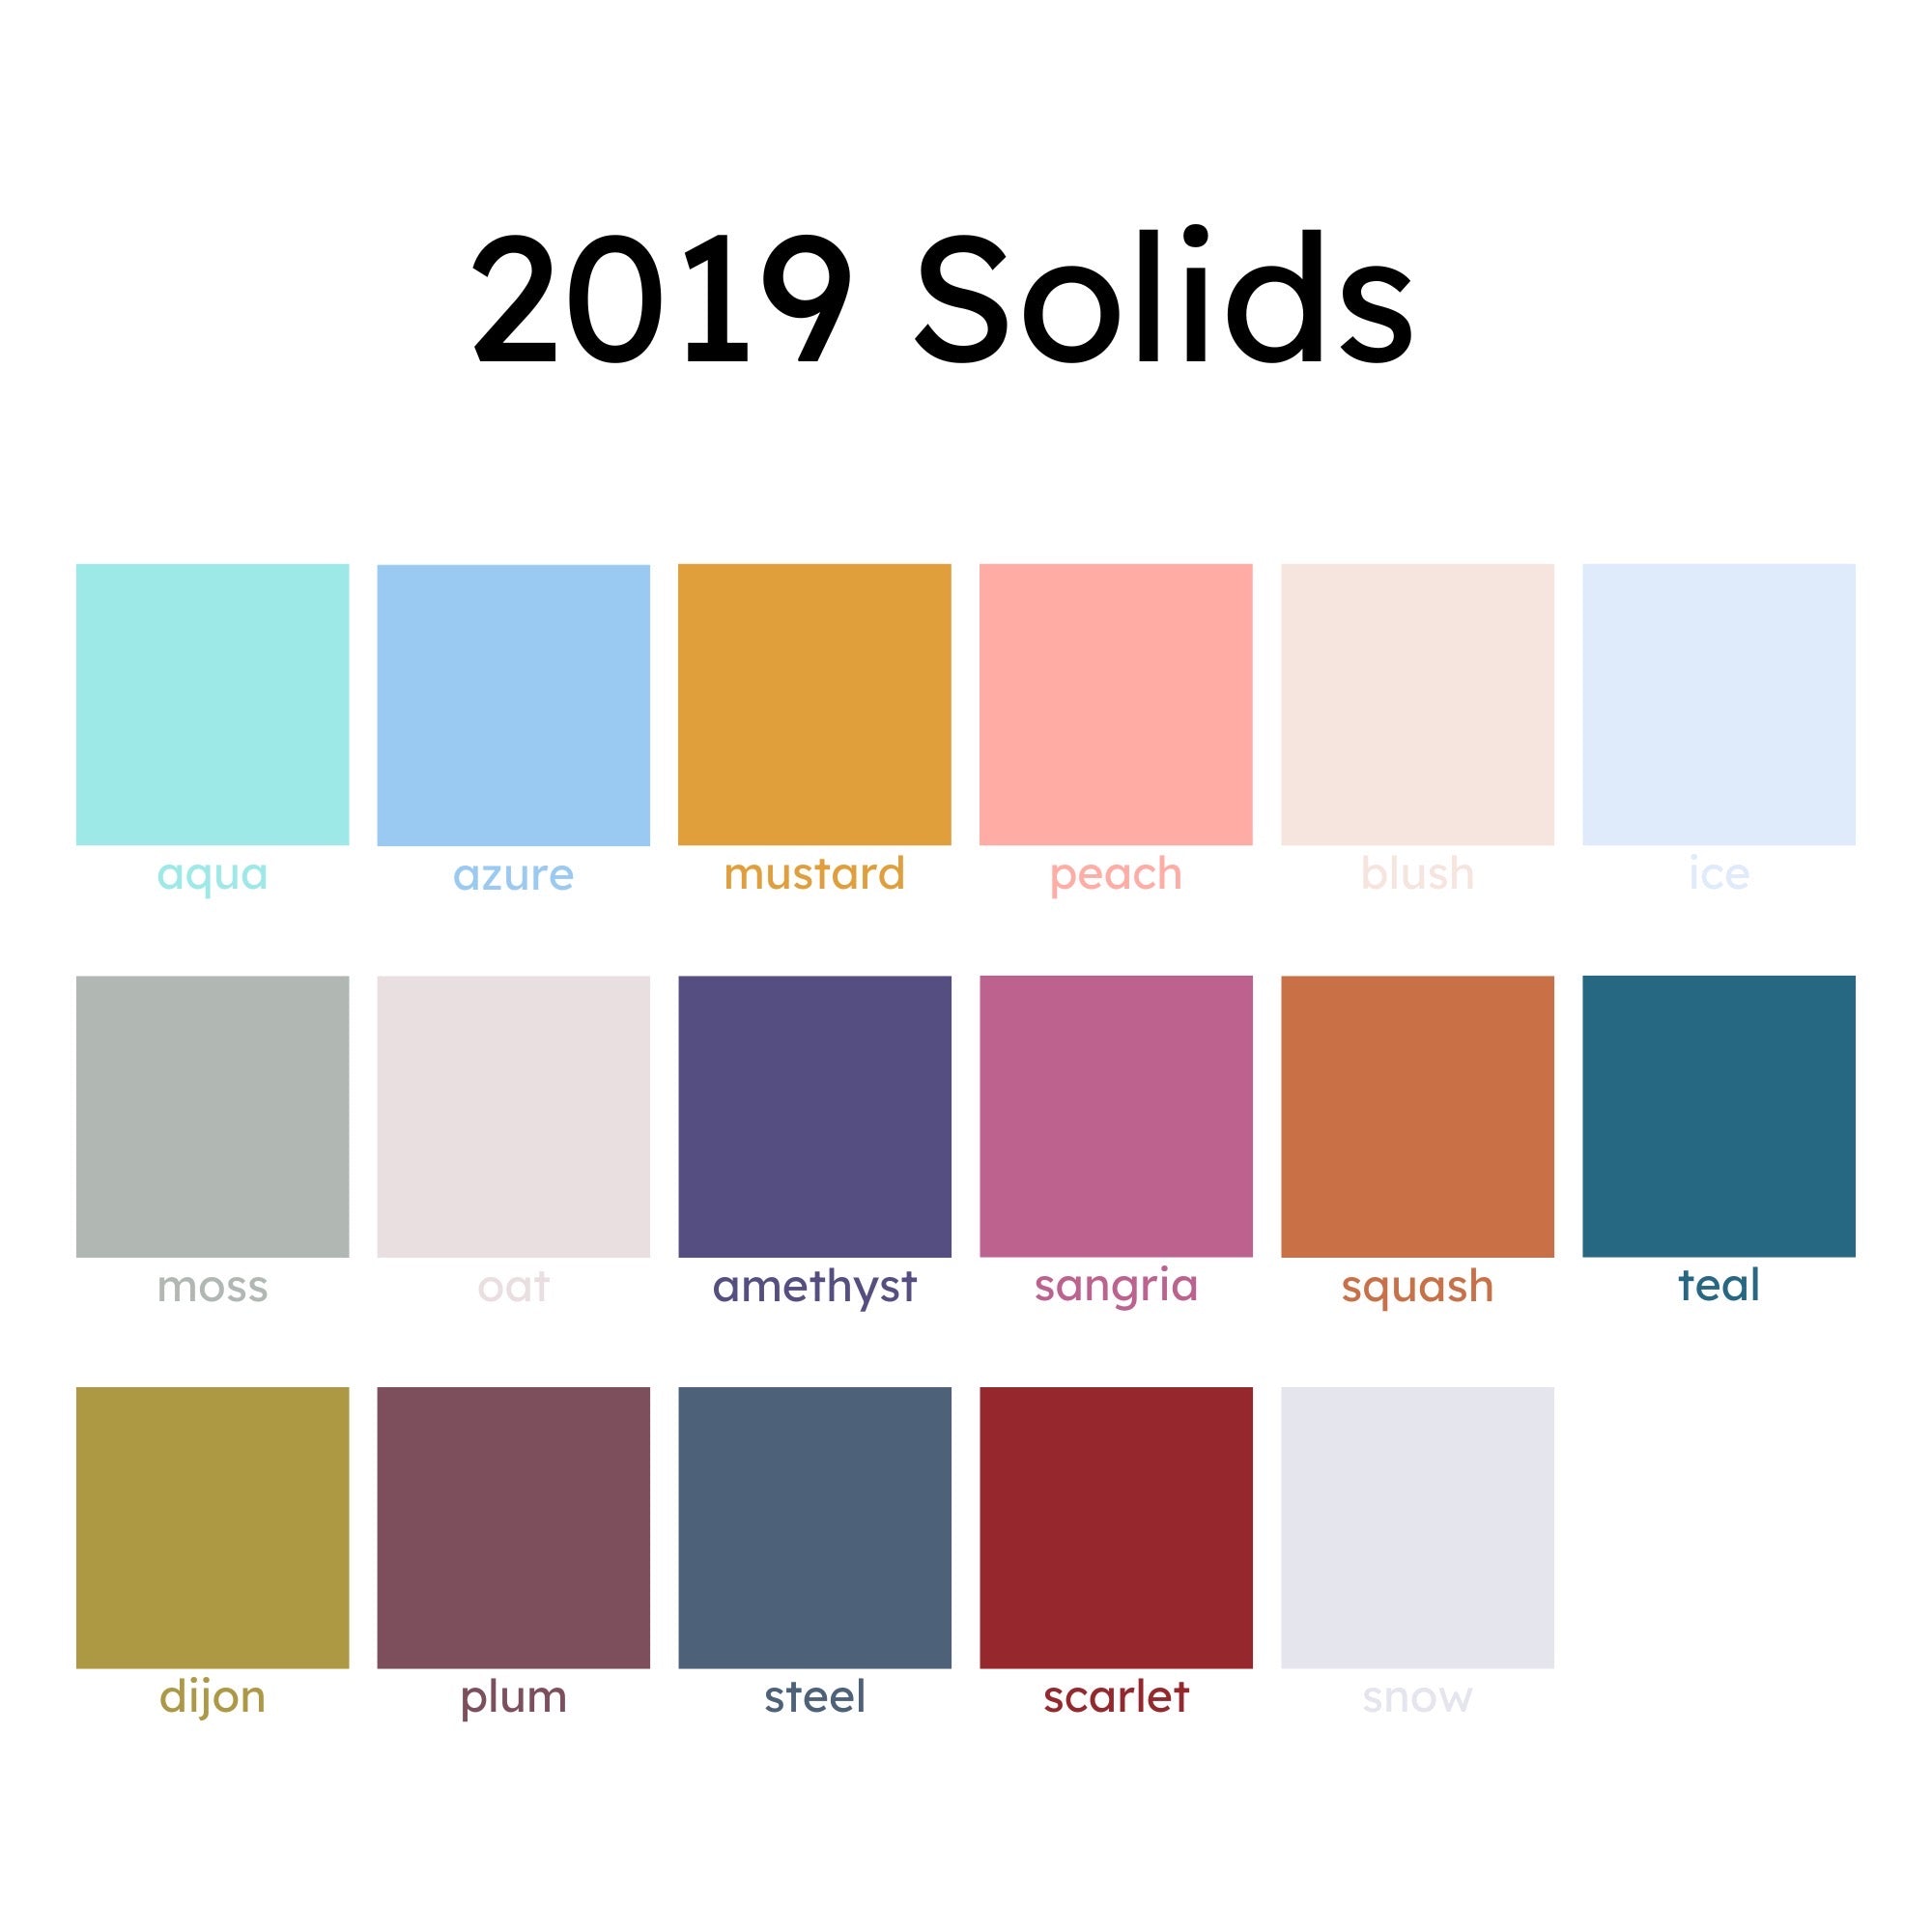 2019 solids